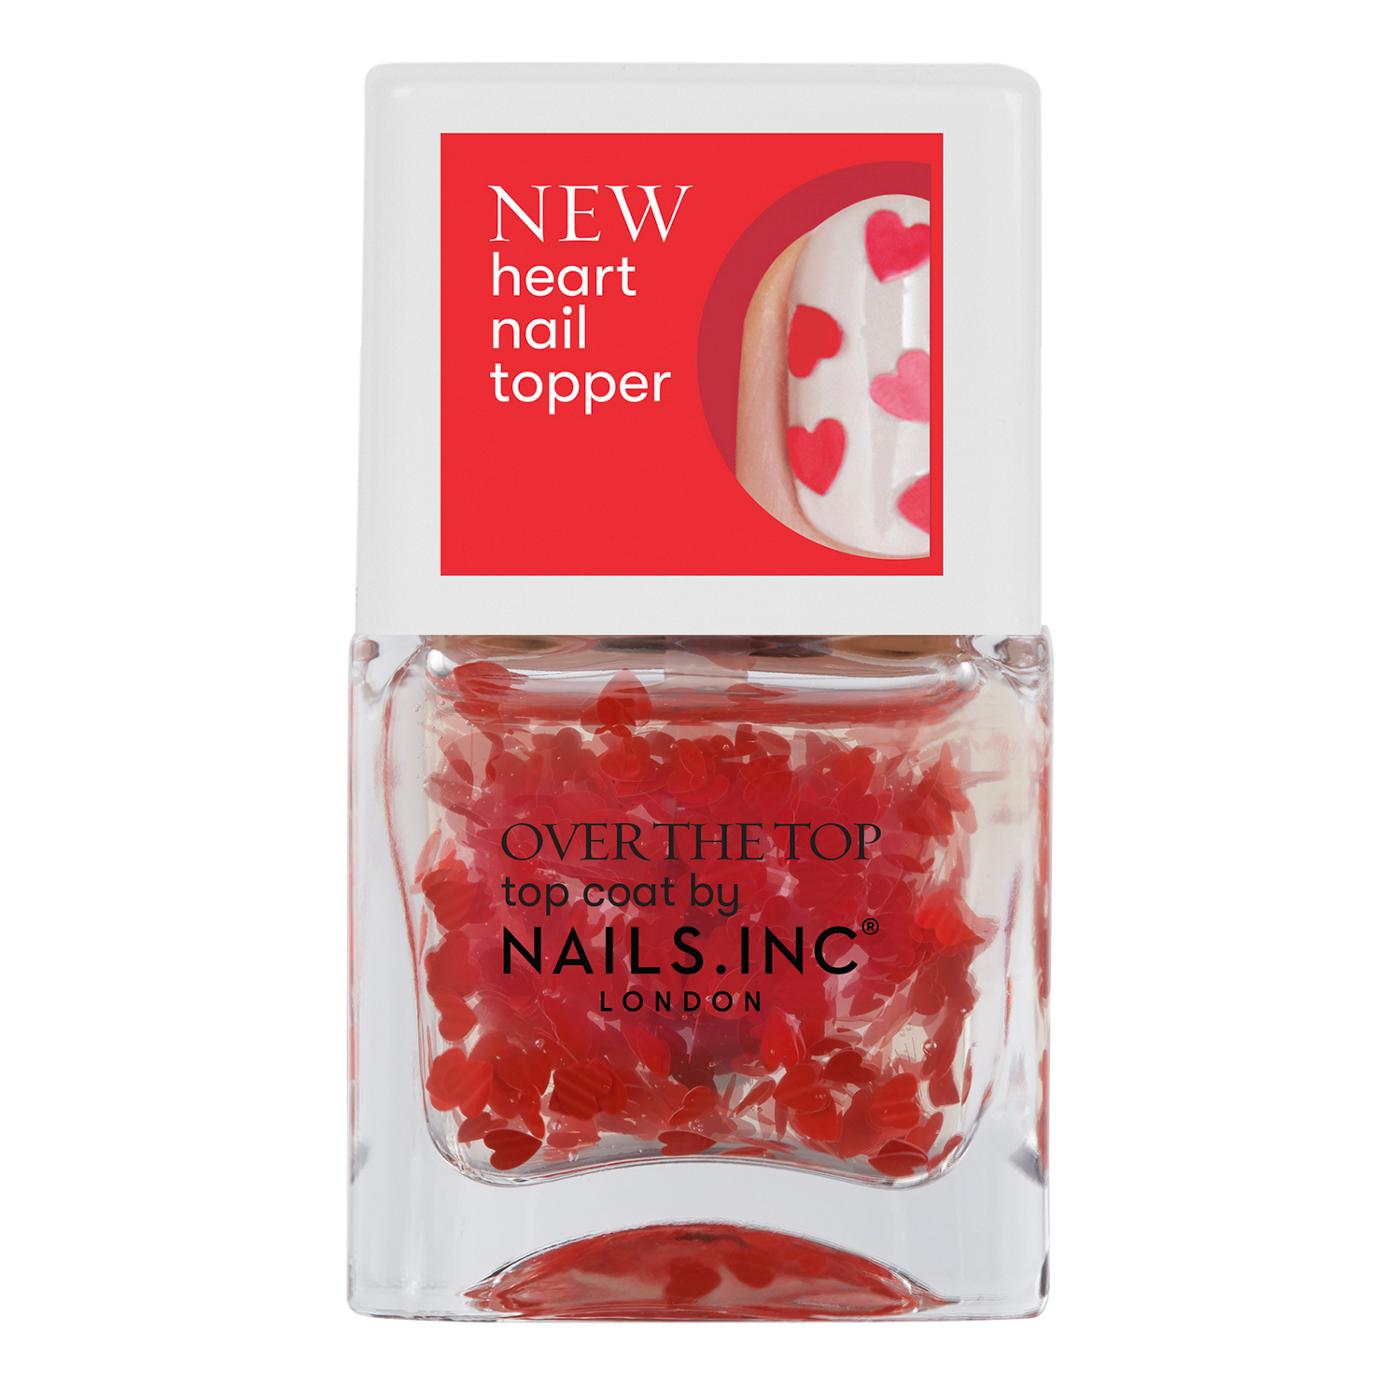 Nails.INC Heart Topper Nail Polish - Loving In London; image 1 of 3